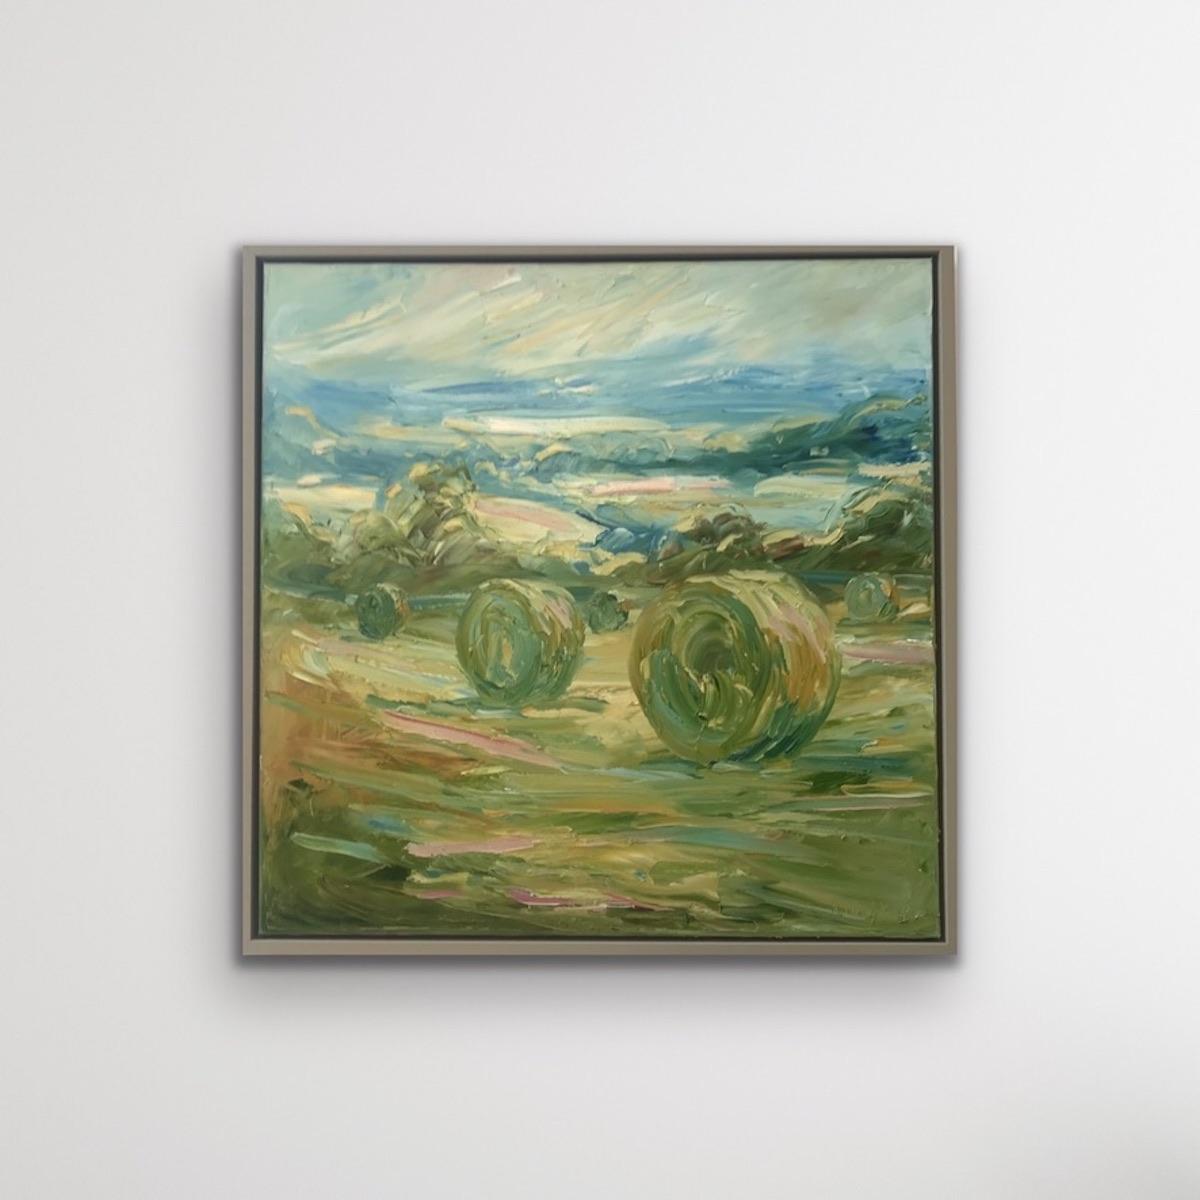 Big Bales July, Rupert Aker, contemporary landscape art, Original painting 2